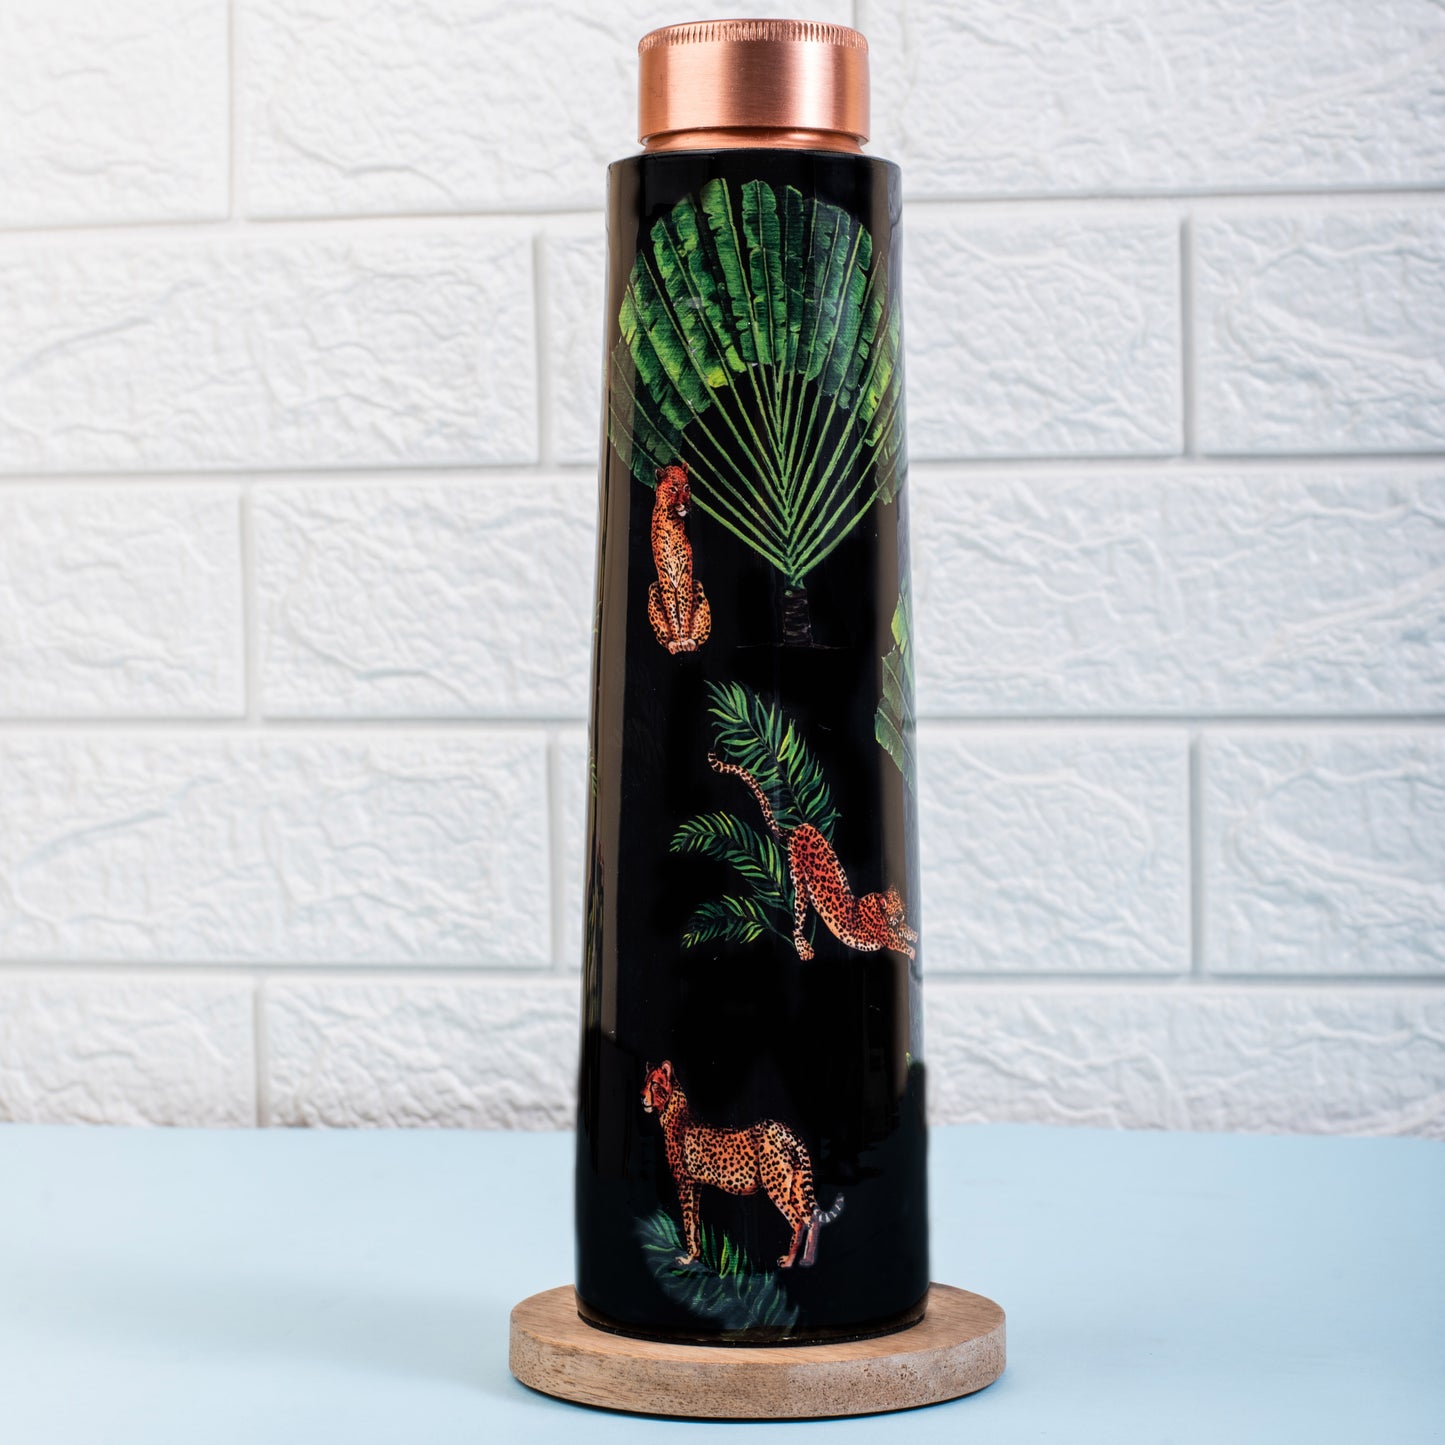 The Leopard Print Copper bottle